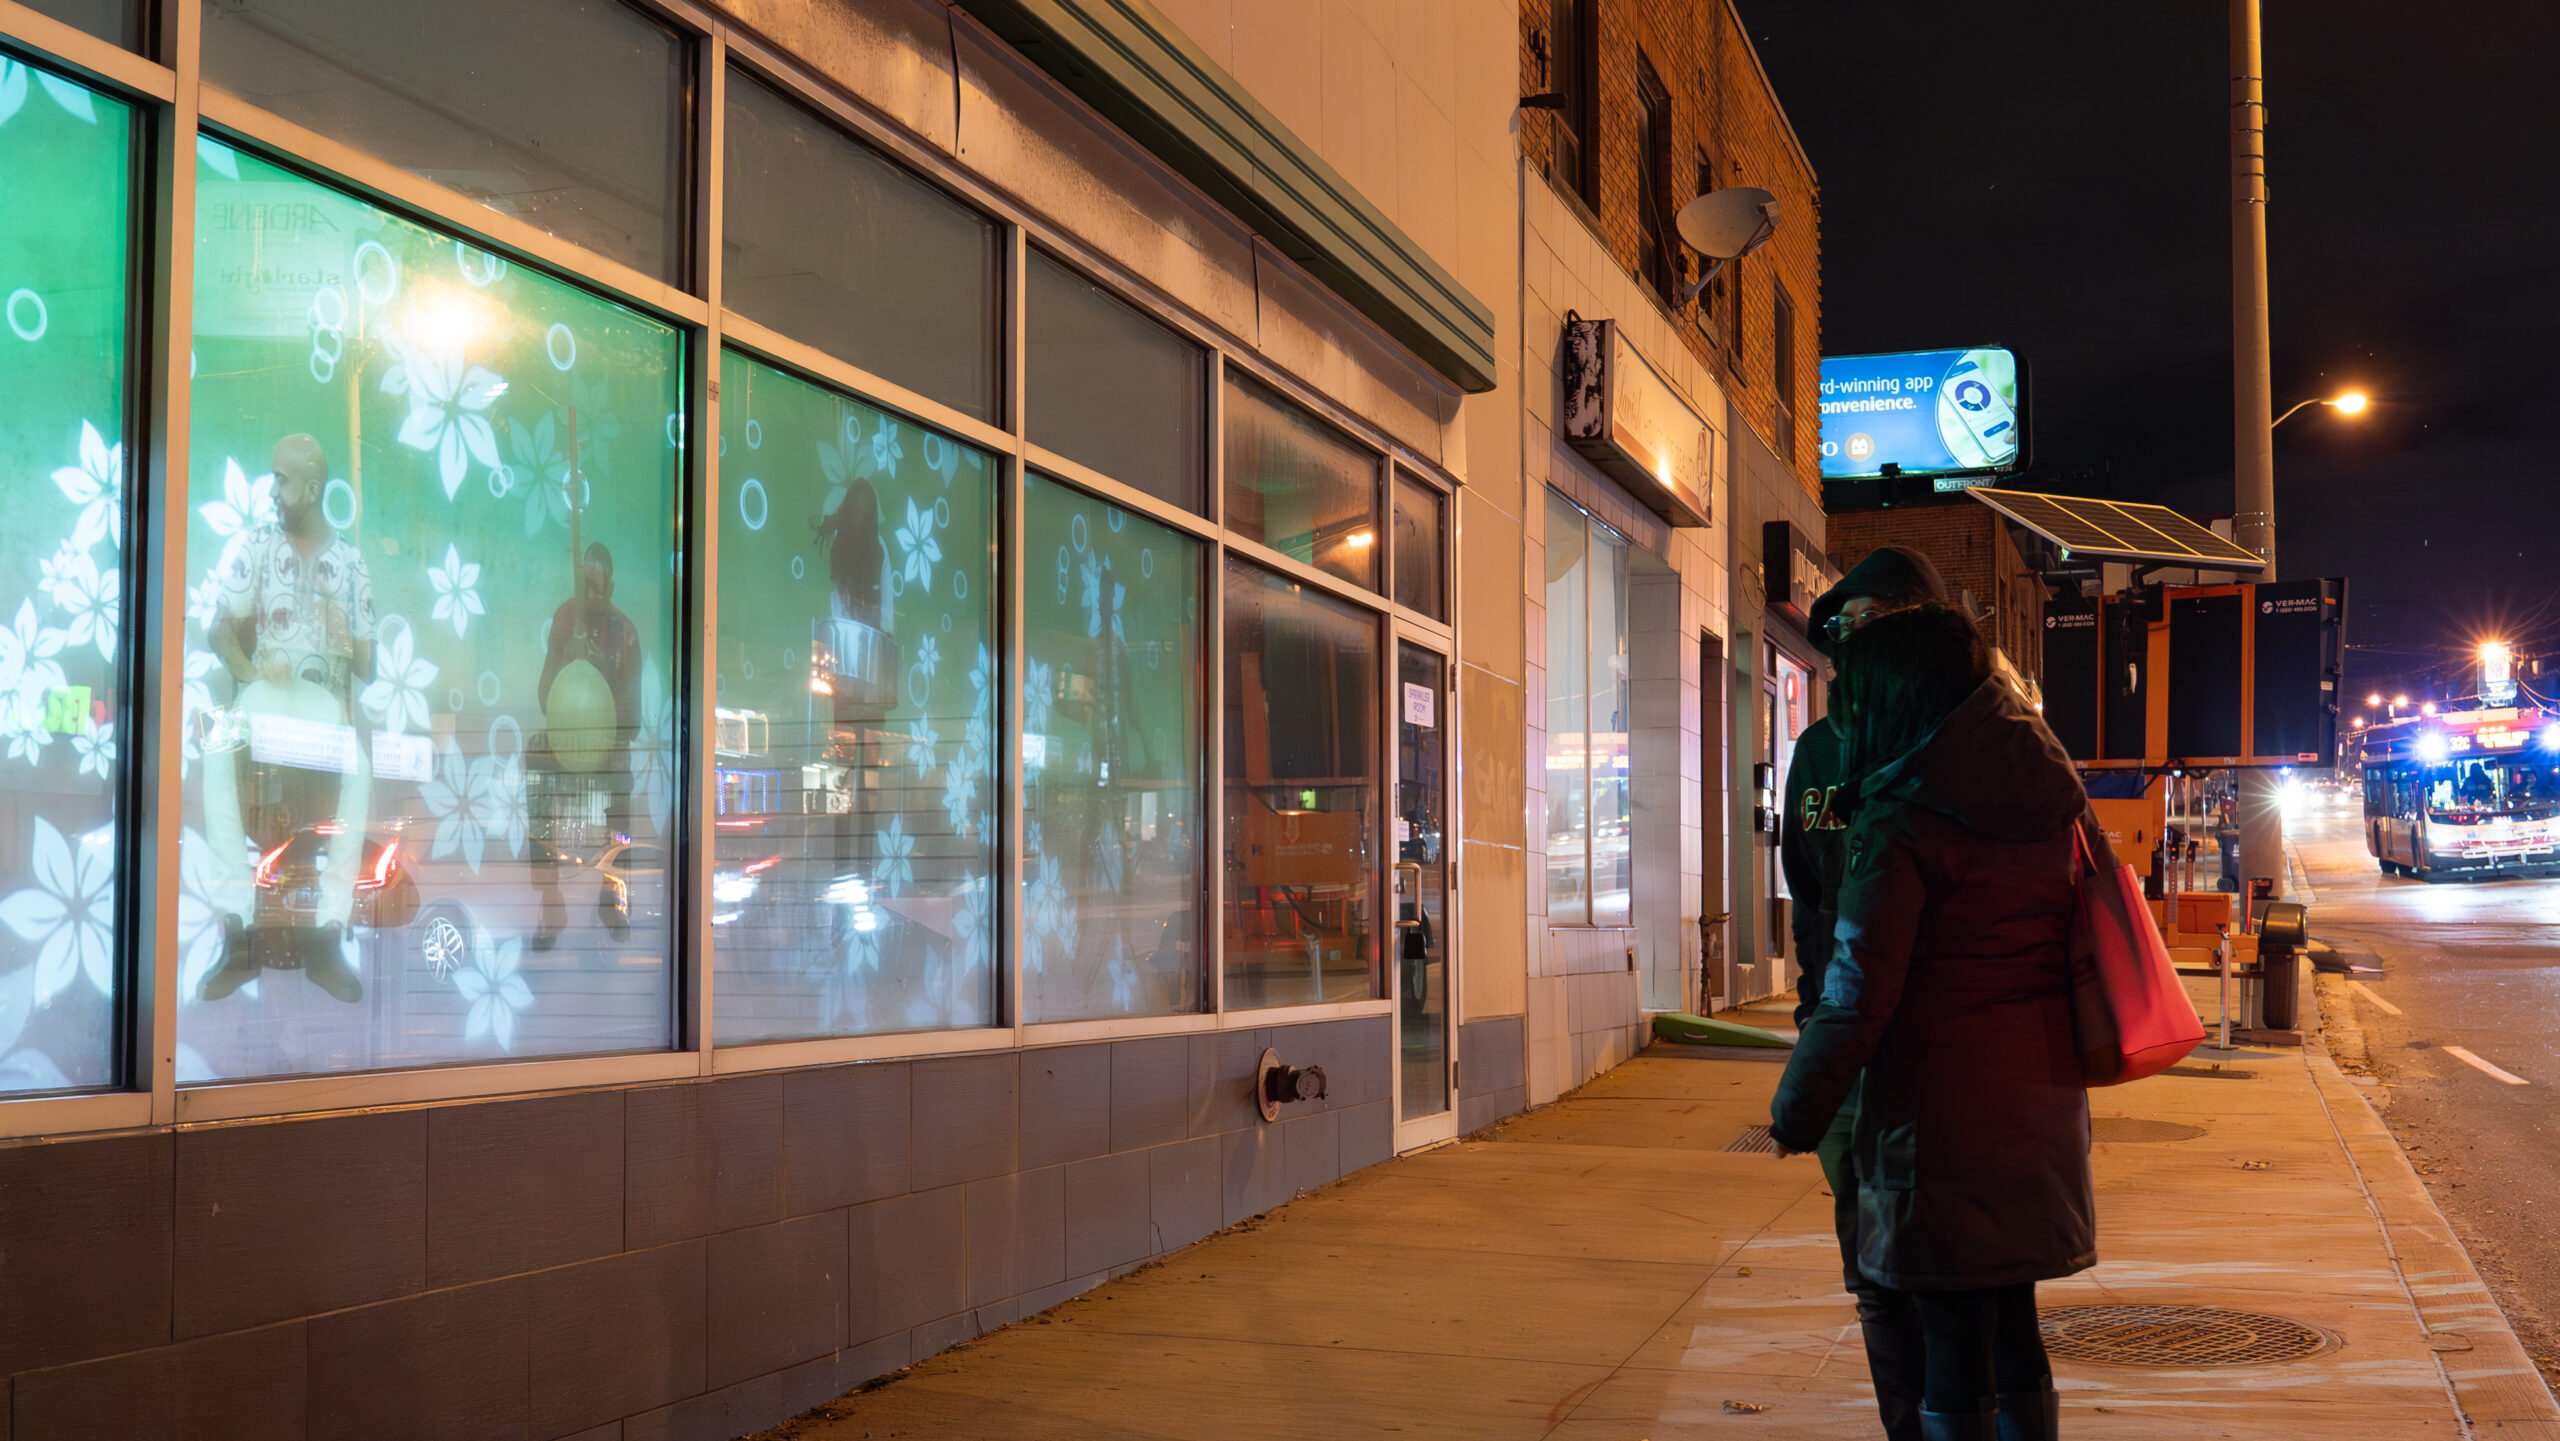 The Magic Windows installation lights up storefront windows in Toronto's Little Jamaica